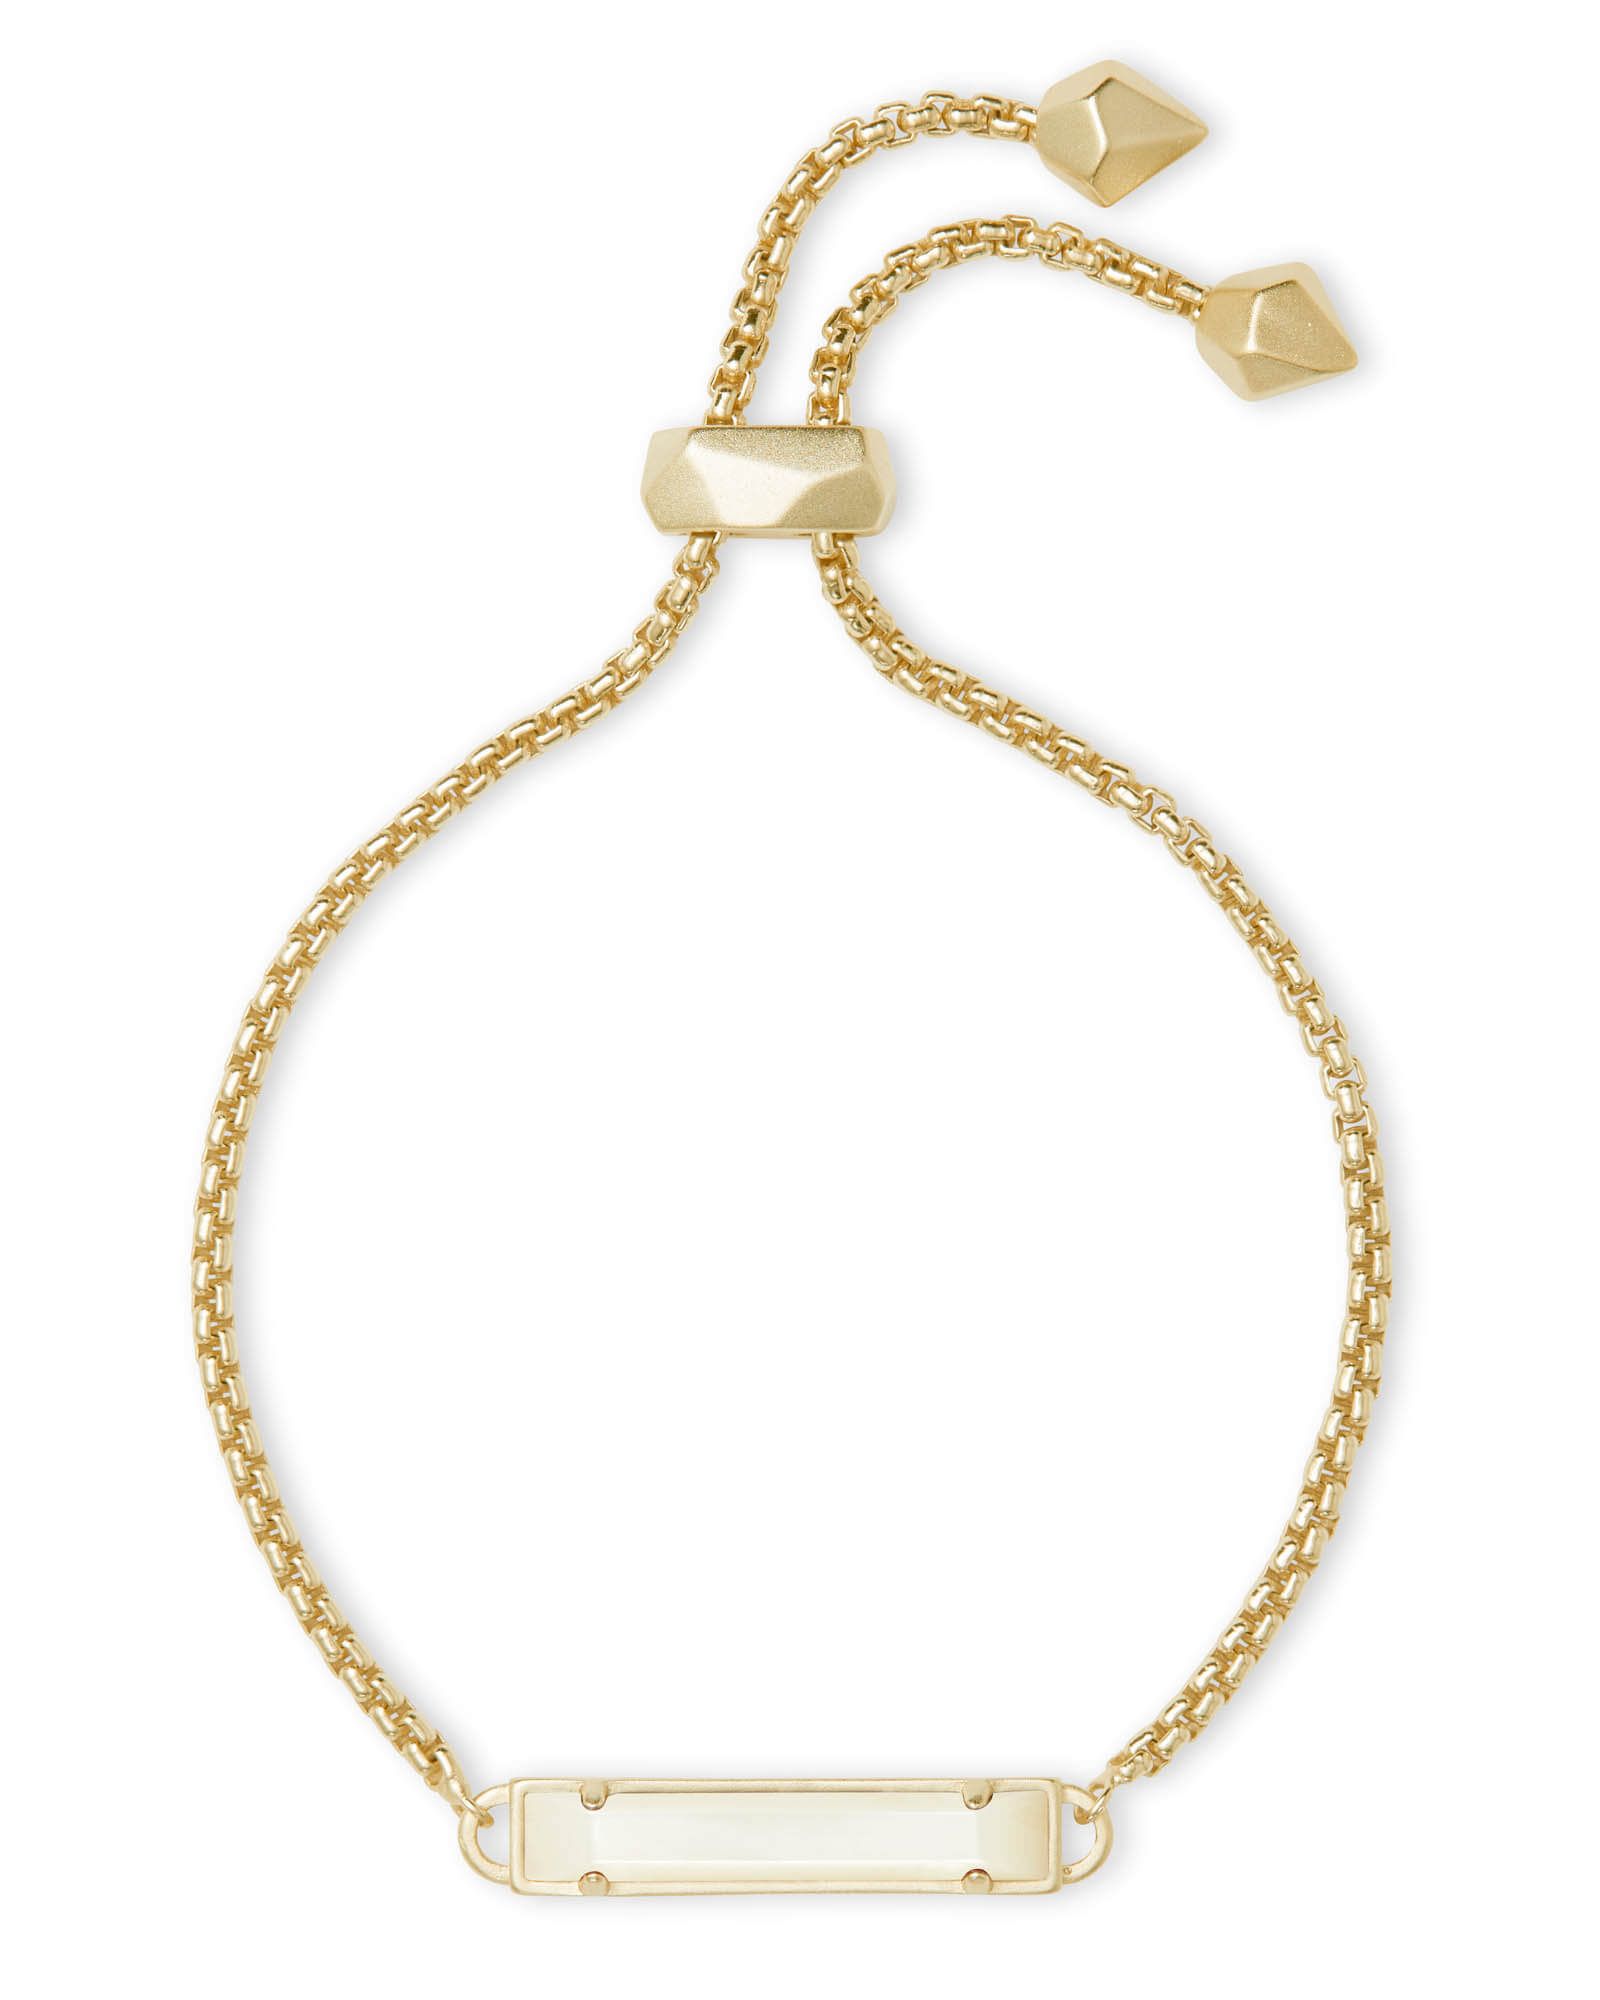 Stan Gold Adjustable Chain Bracelet in White Pearl | Kendra Scott